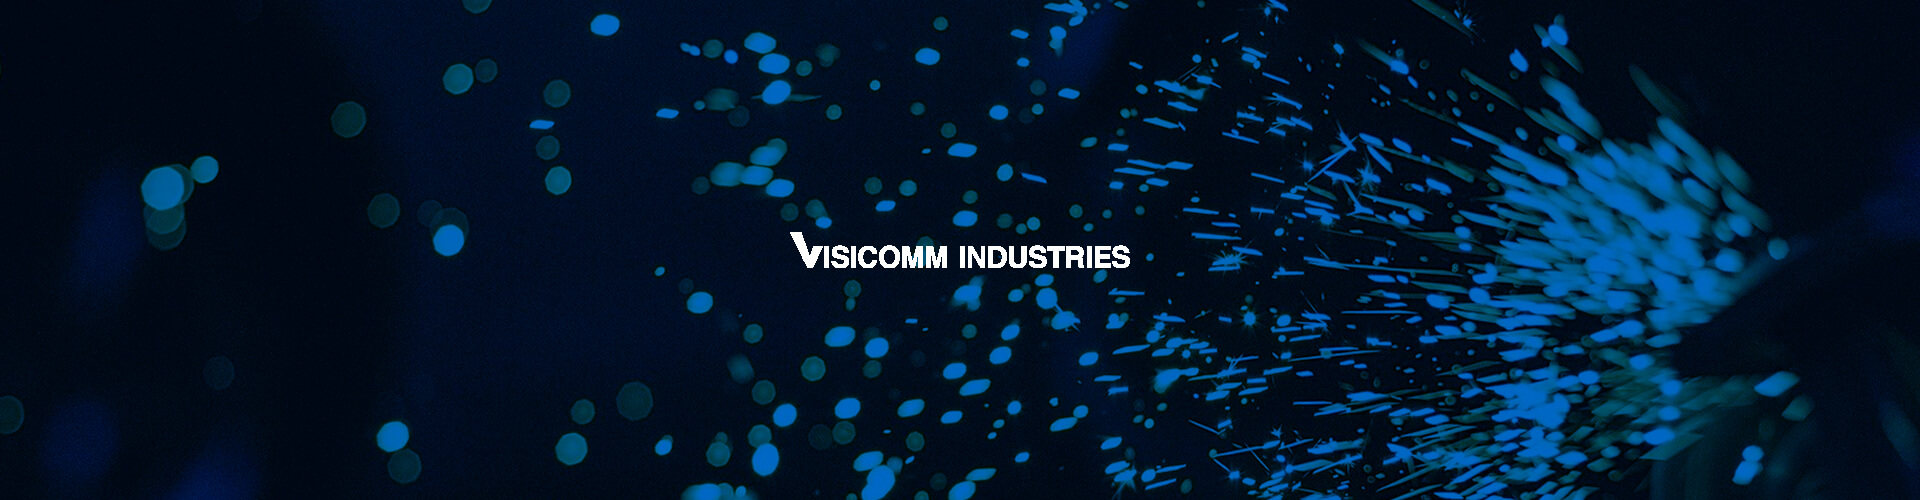 Case Study - Visicomm Industries